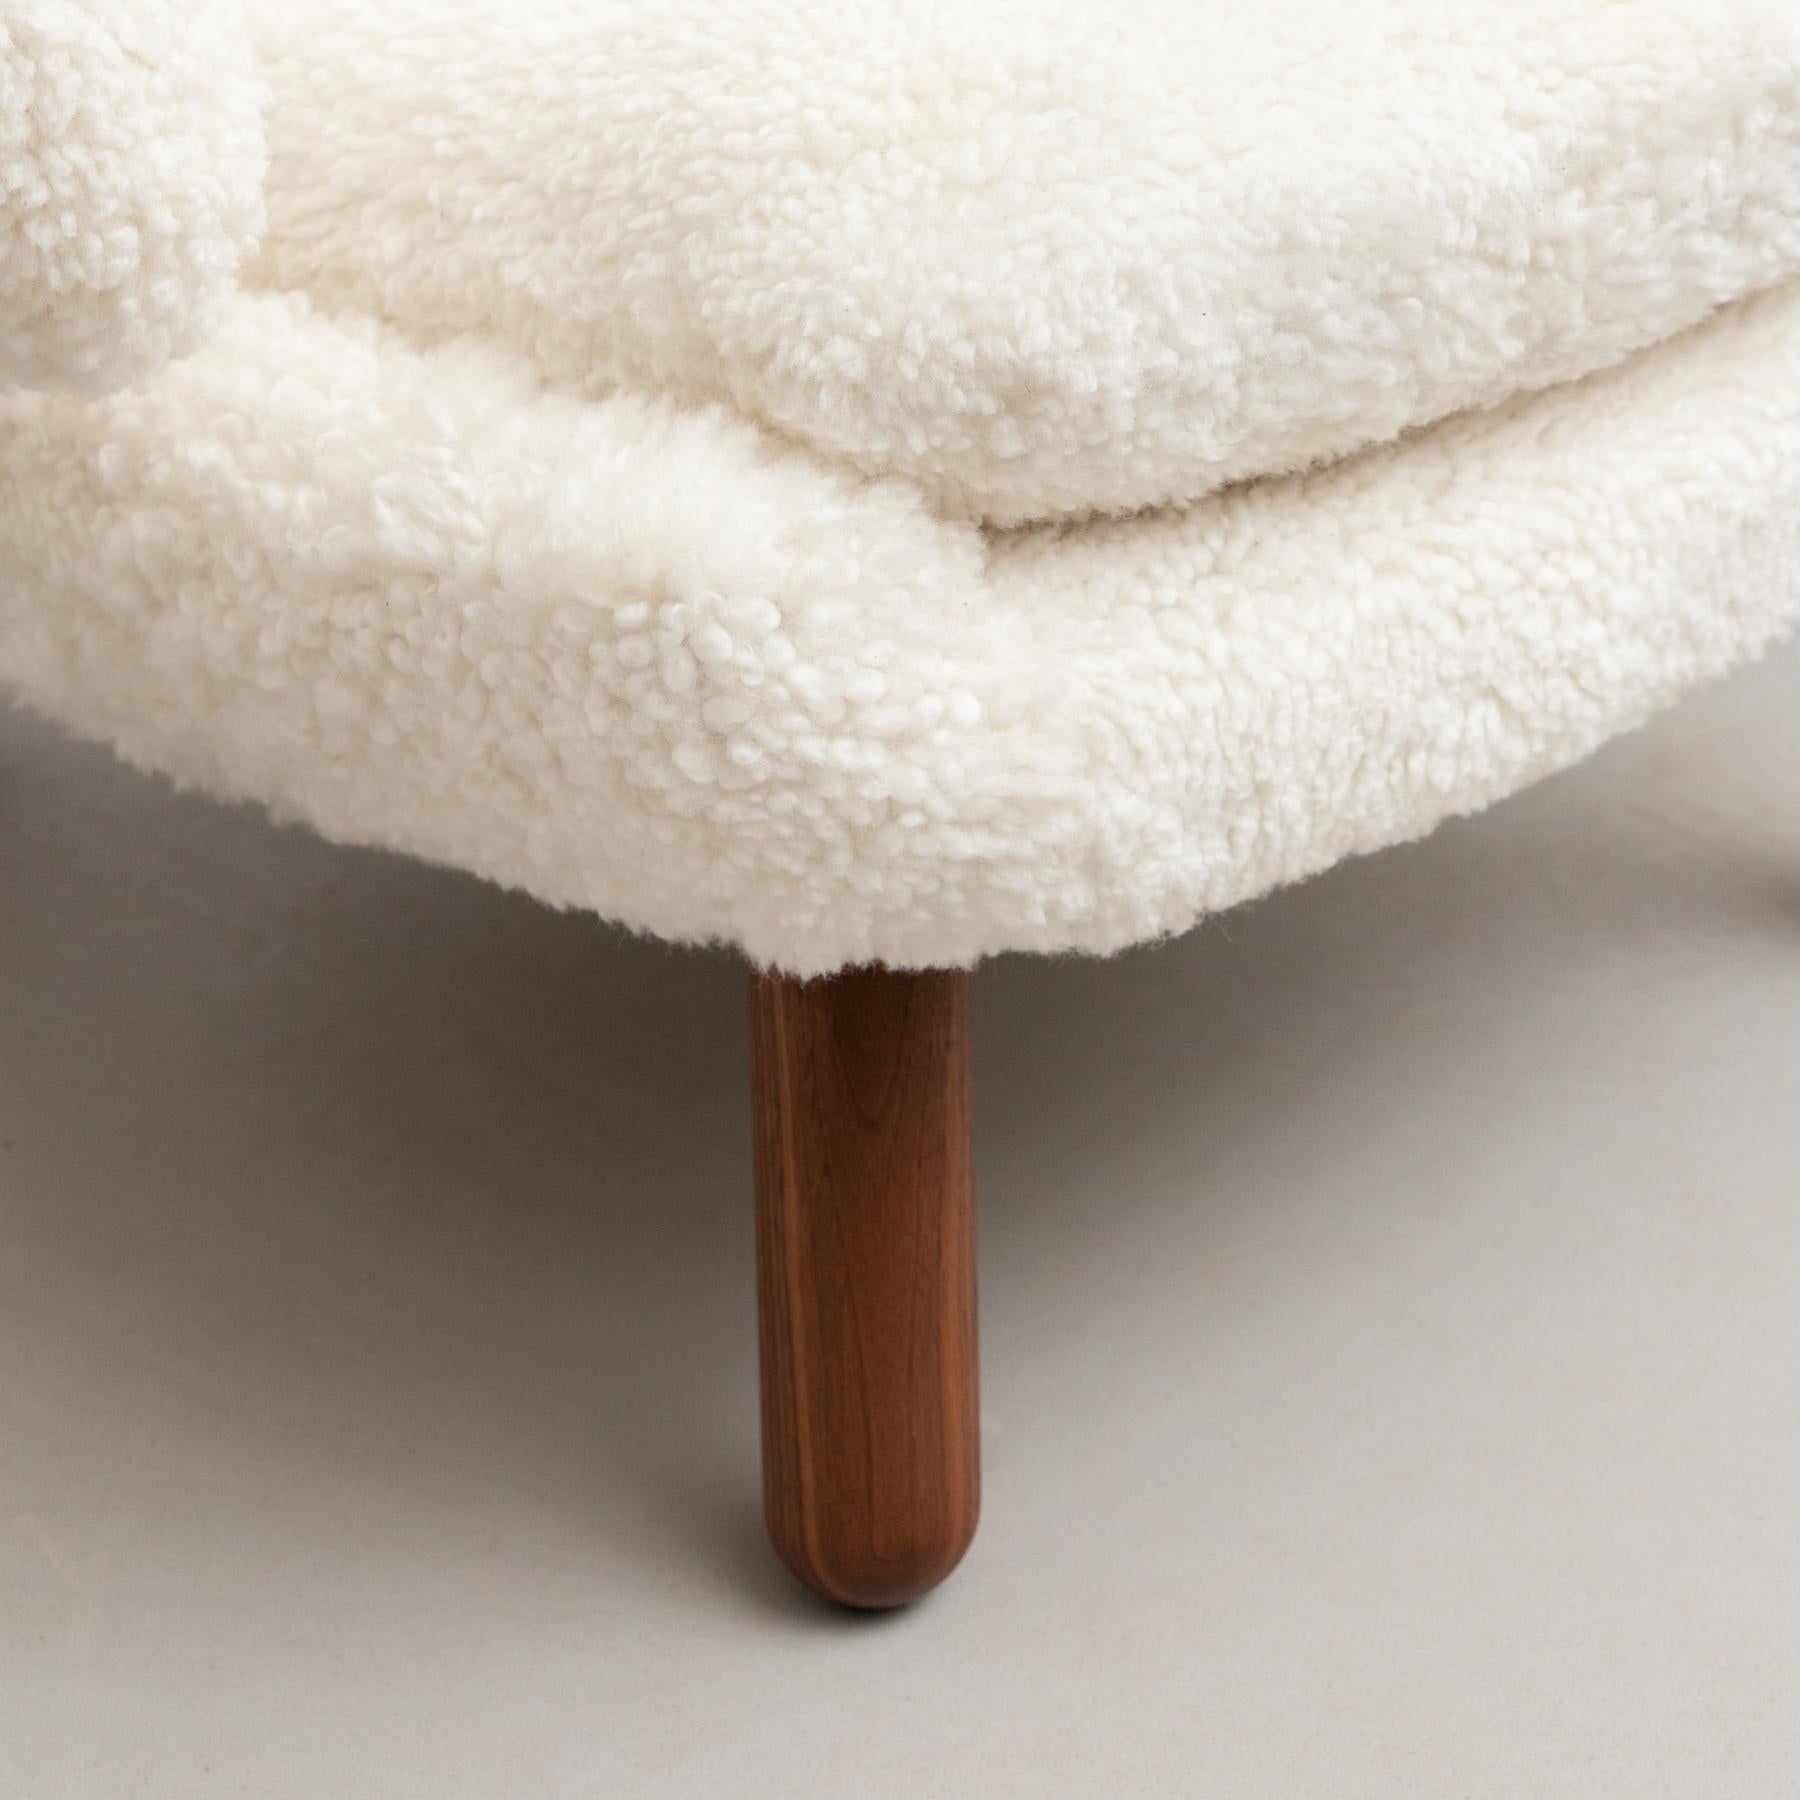 Wood Finn Juhl Pelican Chair Upholstered in Gotland Sheepskin For Sale